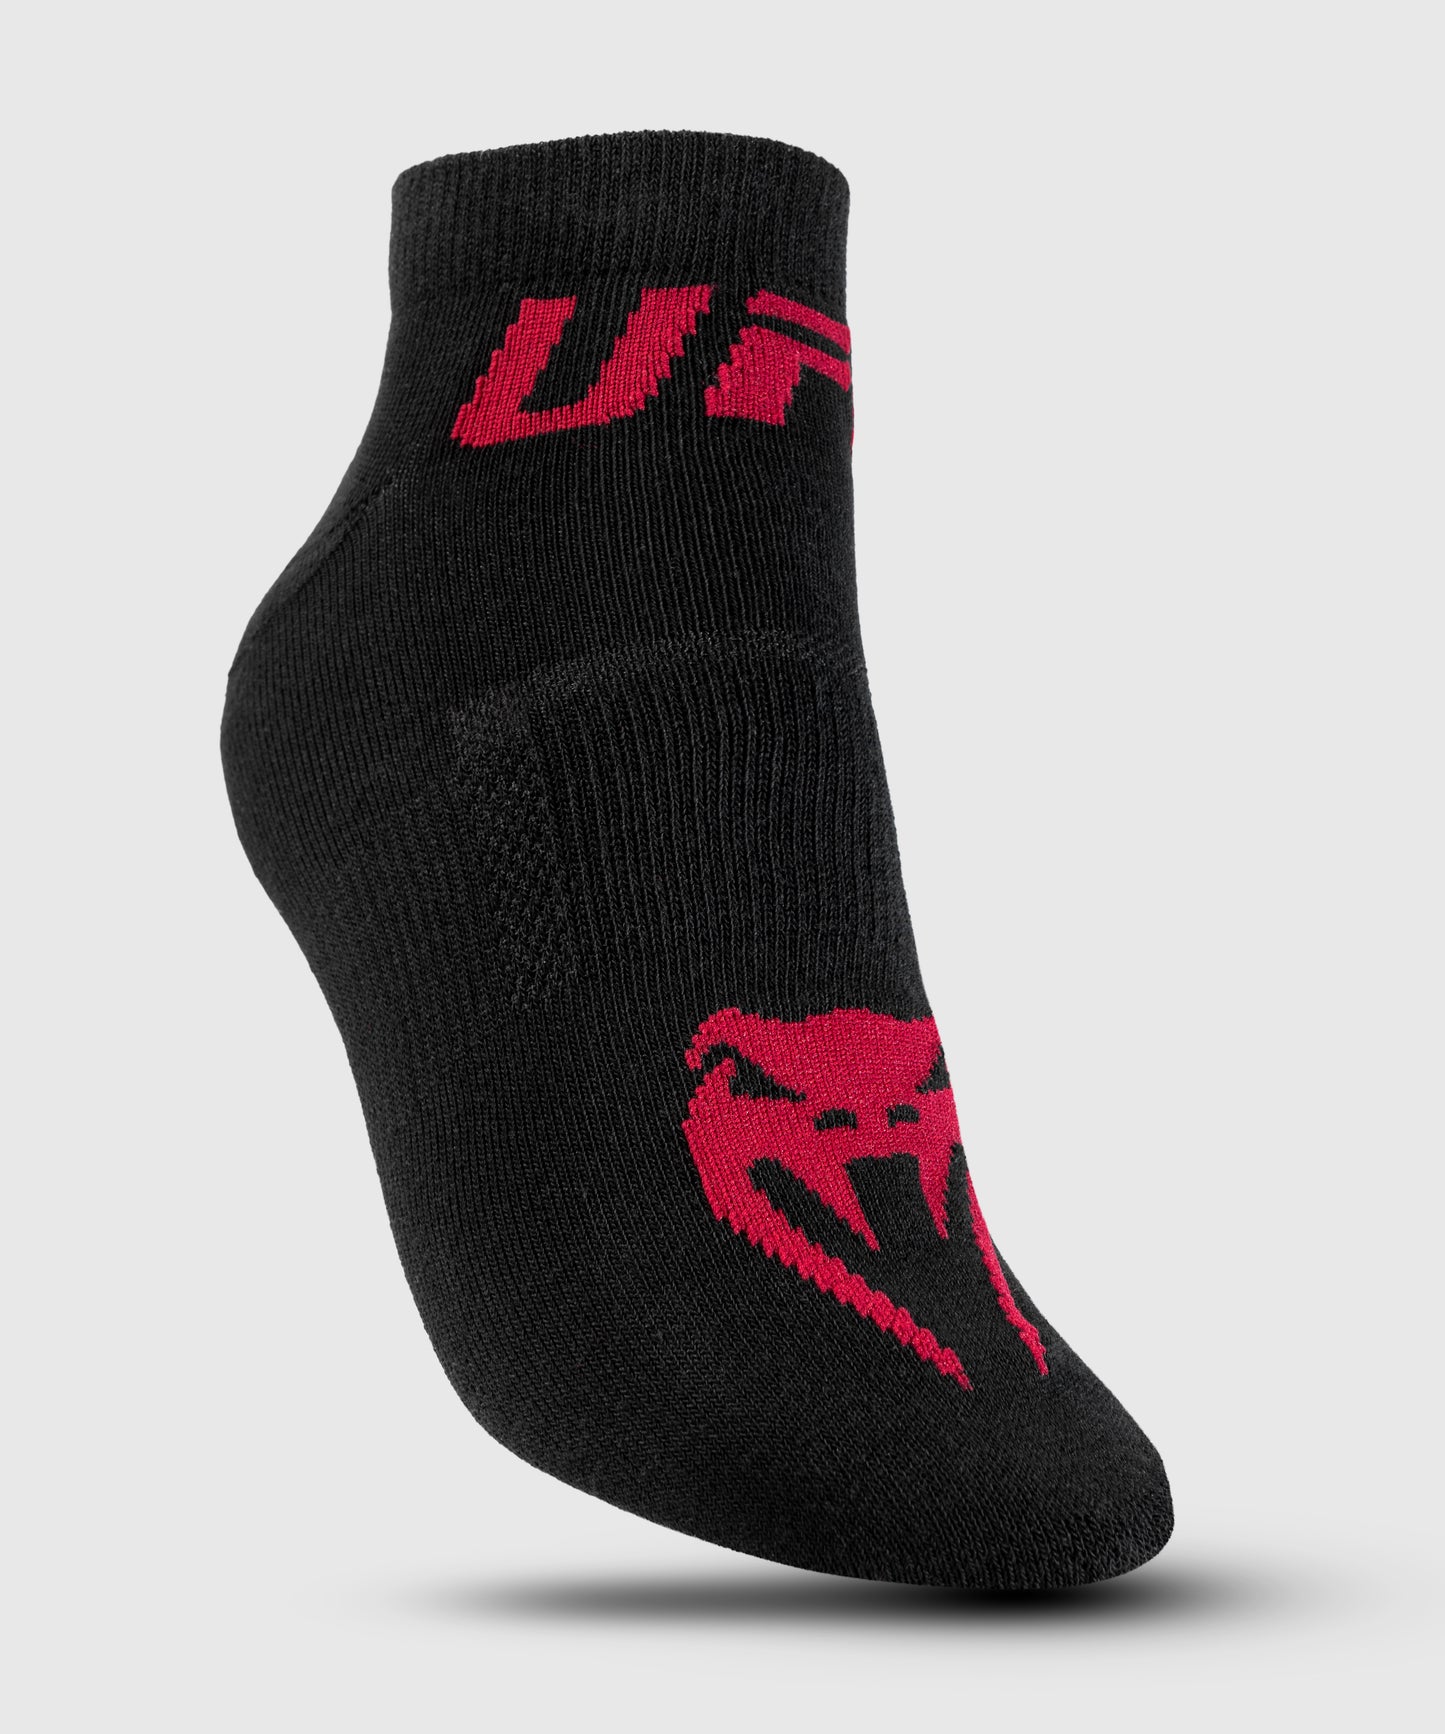 UFC Venum Authentic Fight Week Men’s 2.0 Performance Sock set of 2 - Black/Red